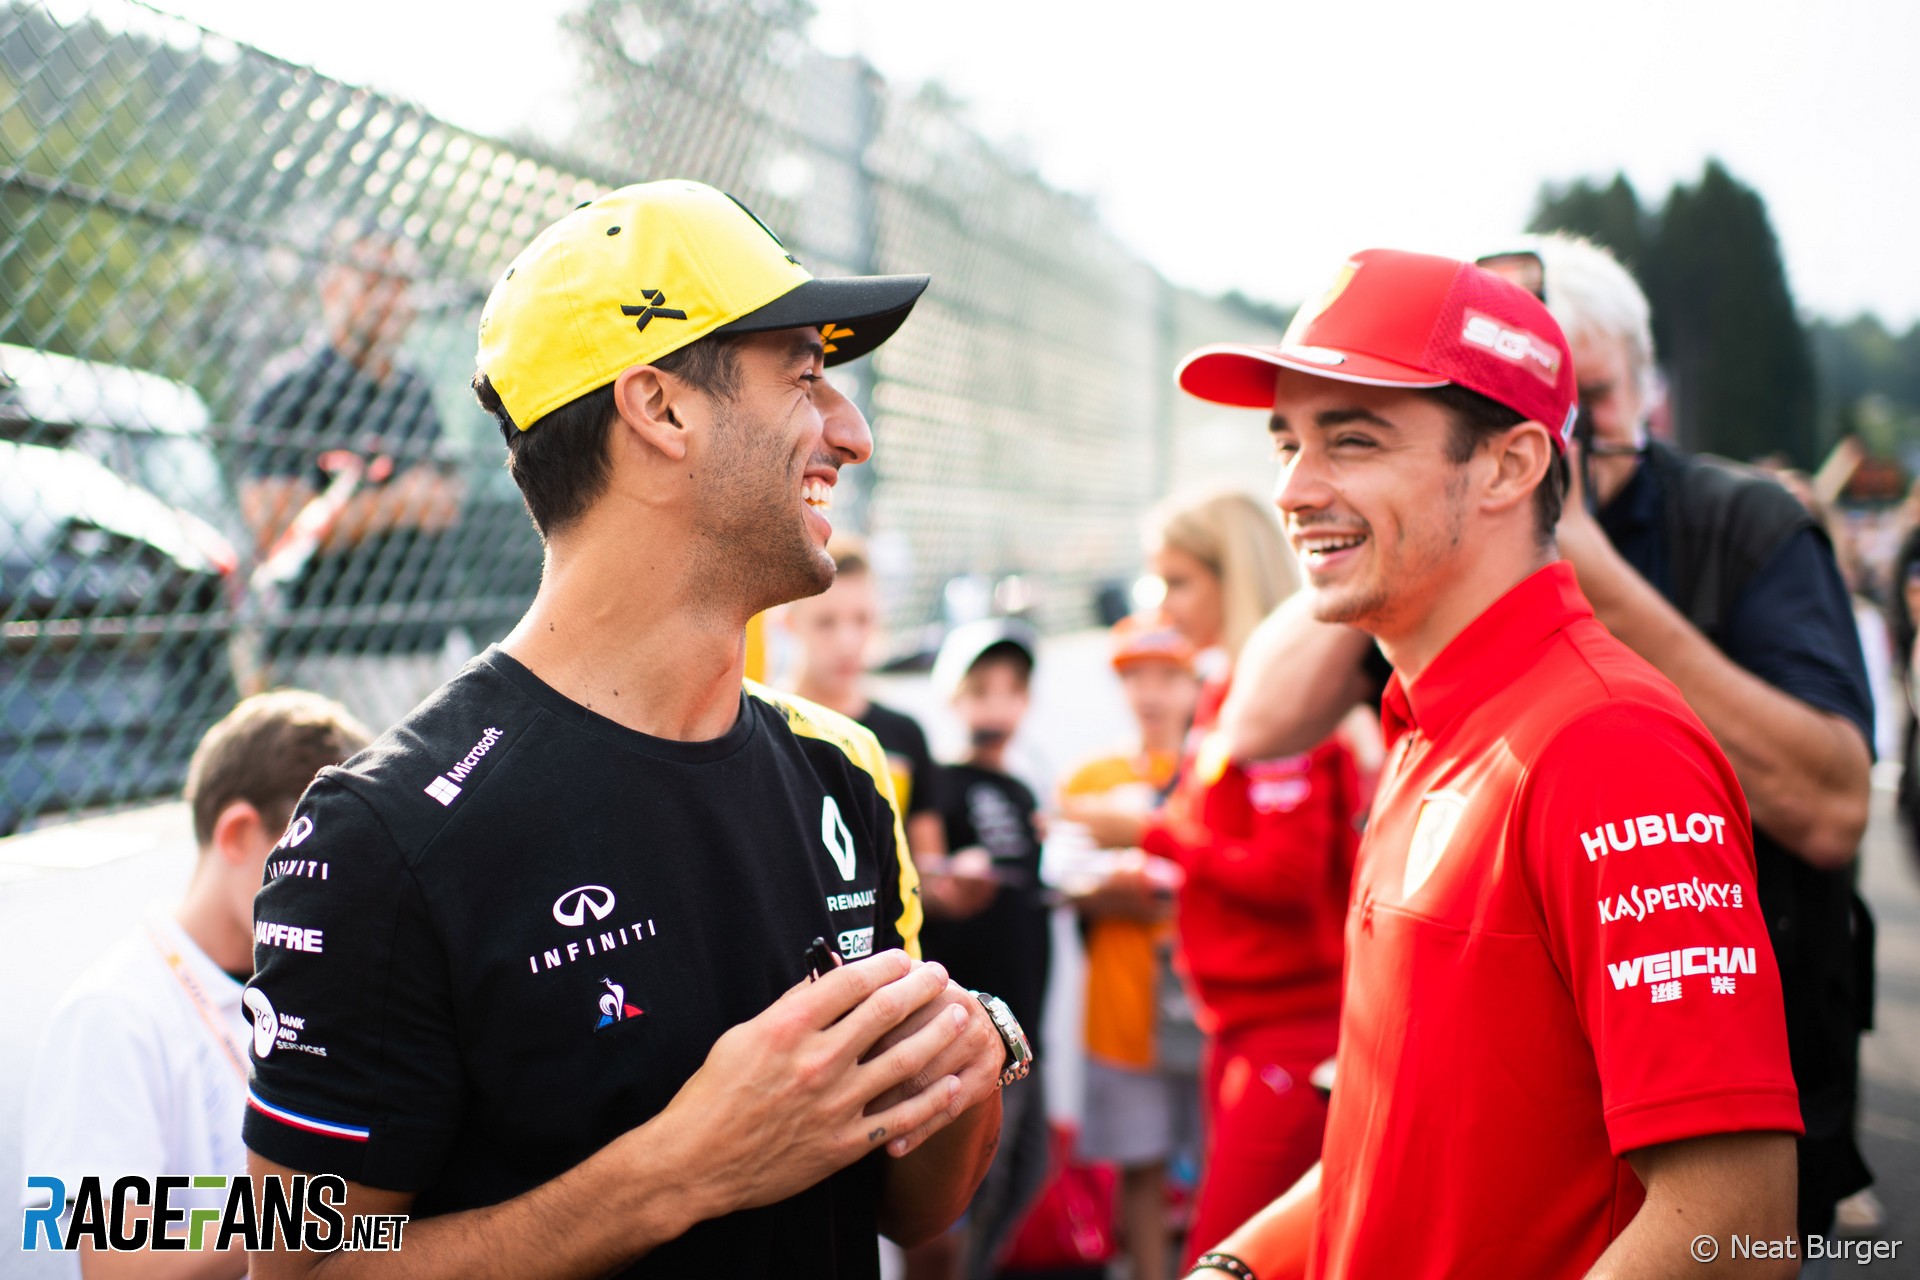 Daniel Ricciardo, Charles Leclerc, Spa-Francorchamps, 2019